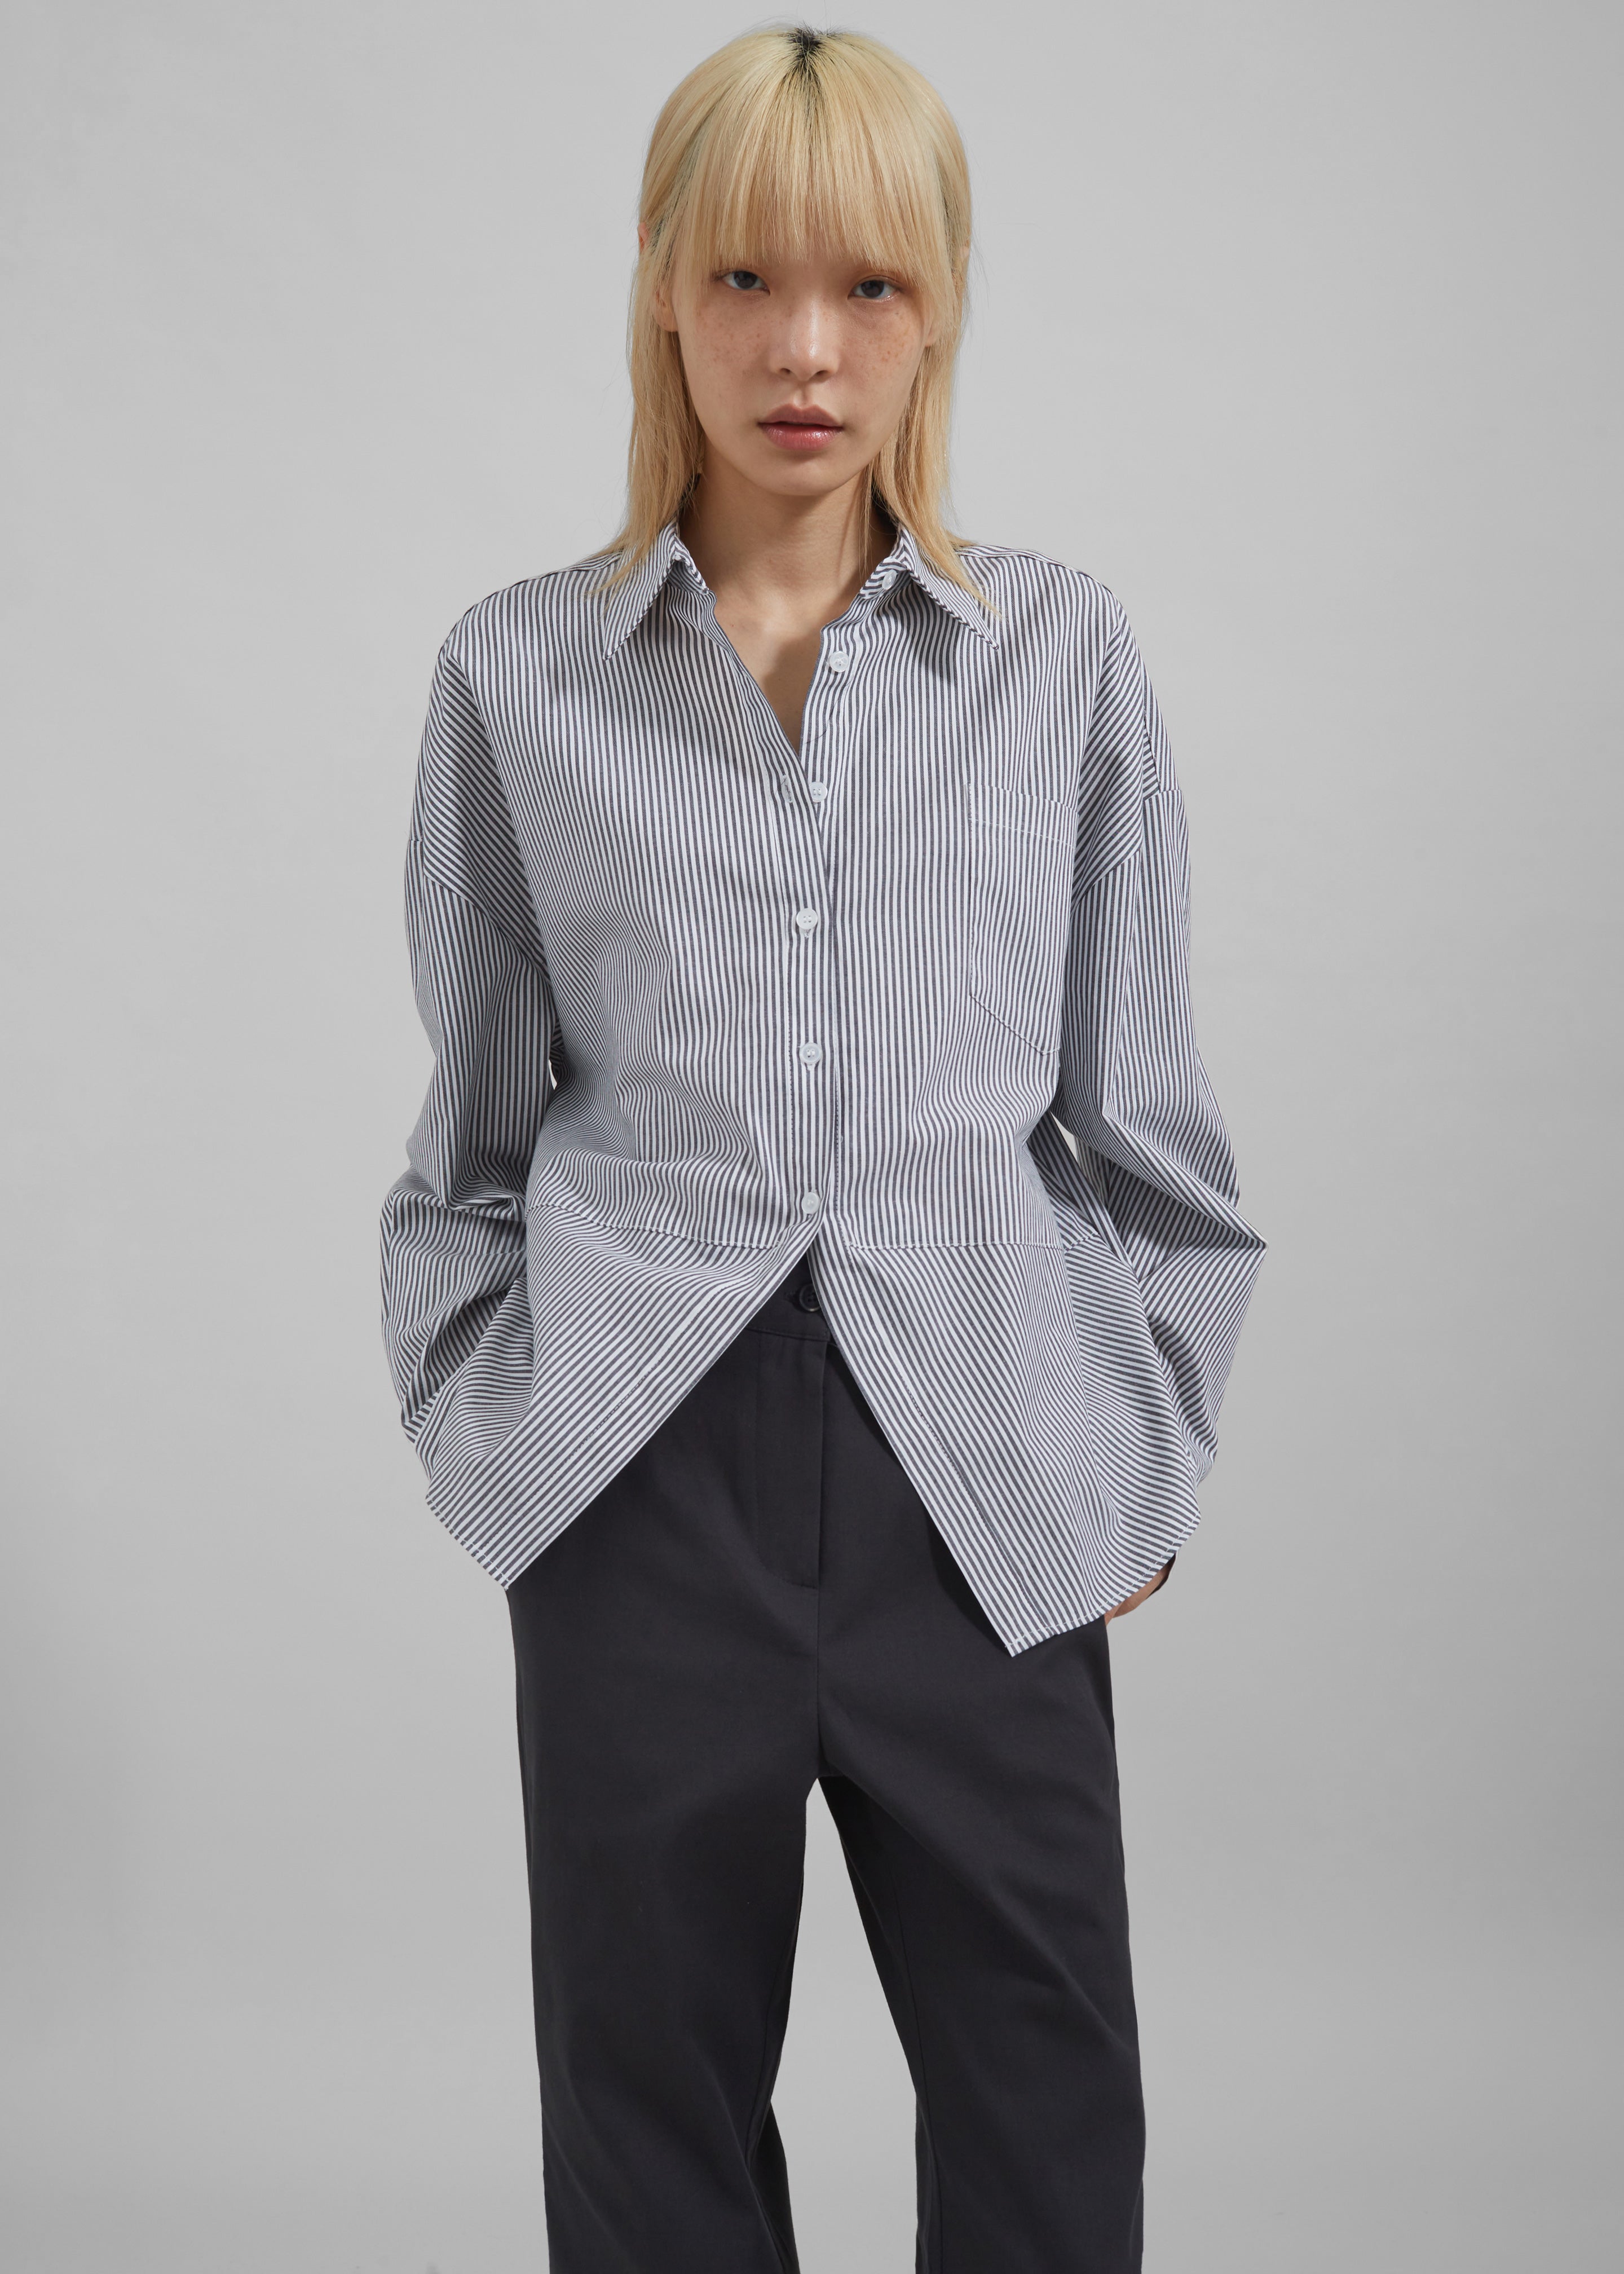 Liv Button Up Shirt - Black/White Stripe - 1